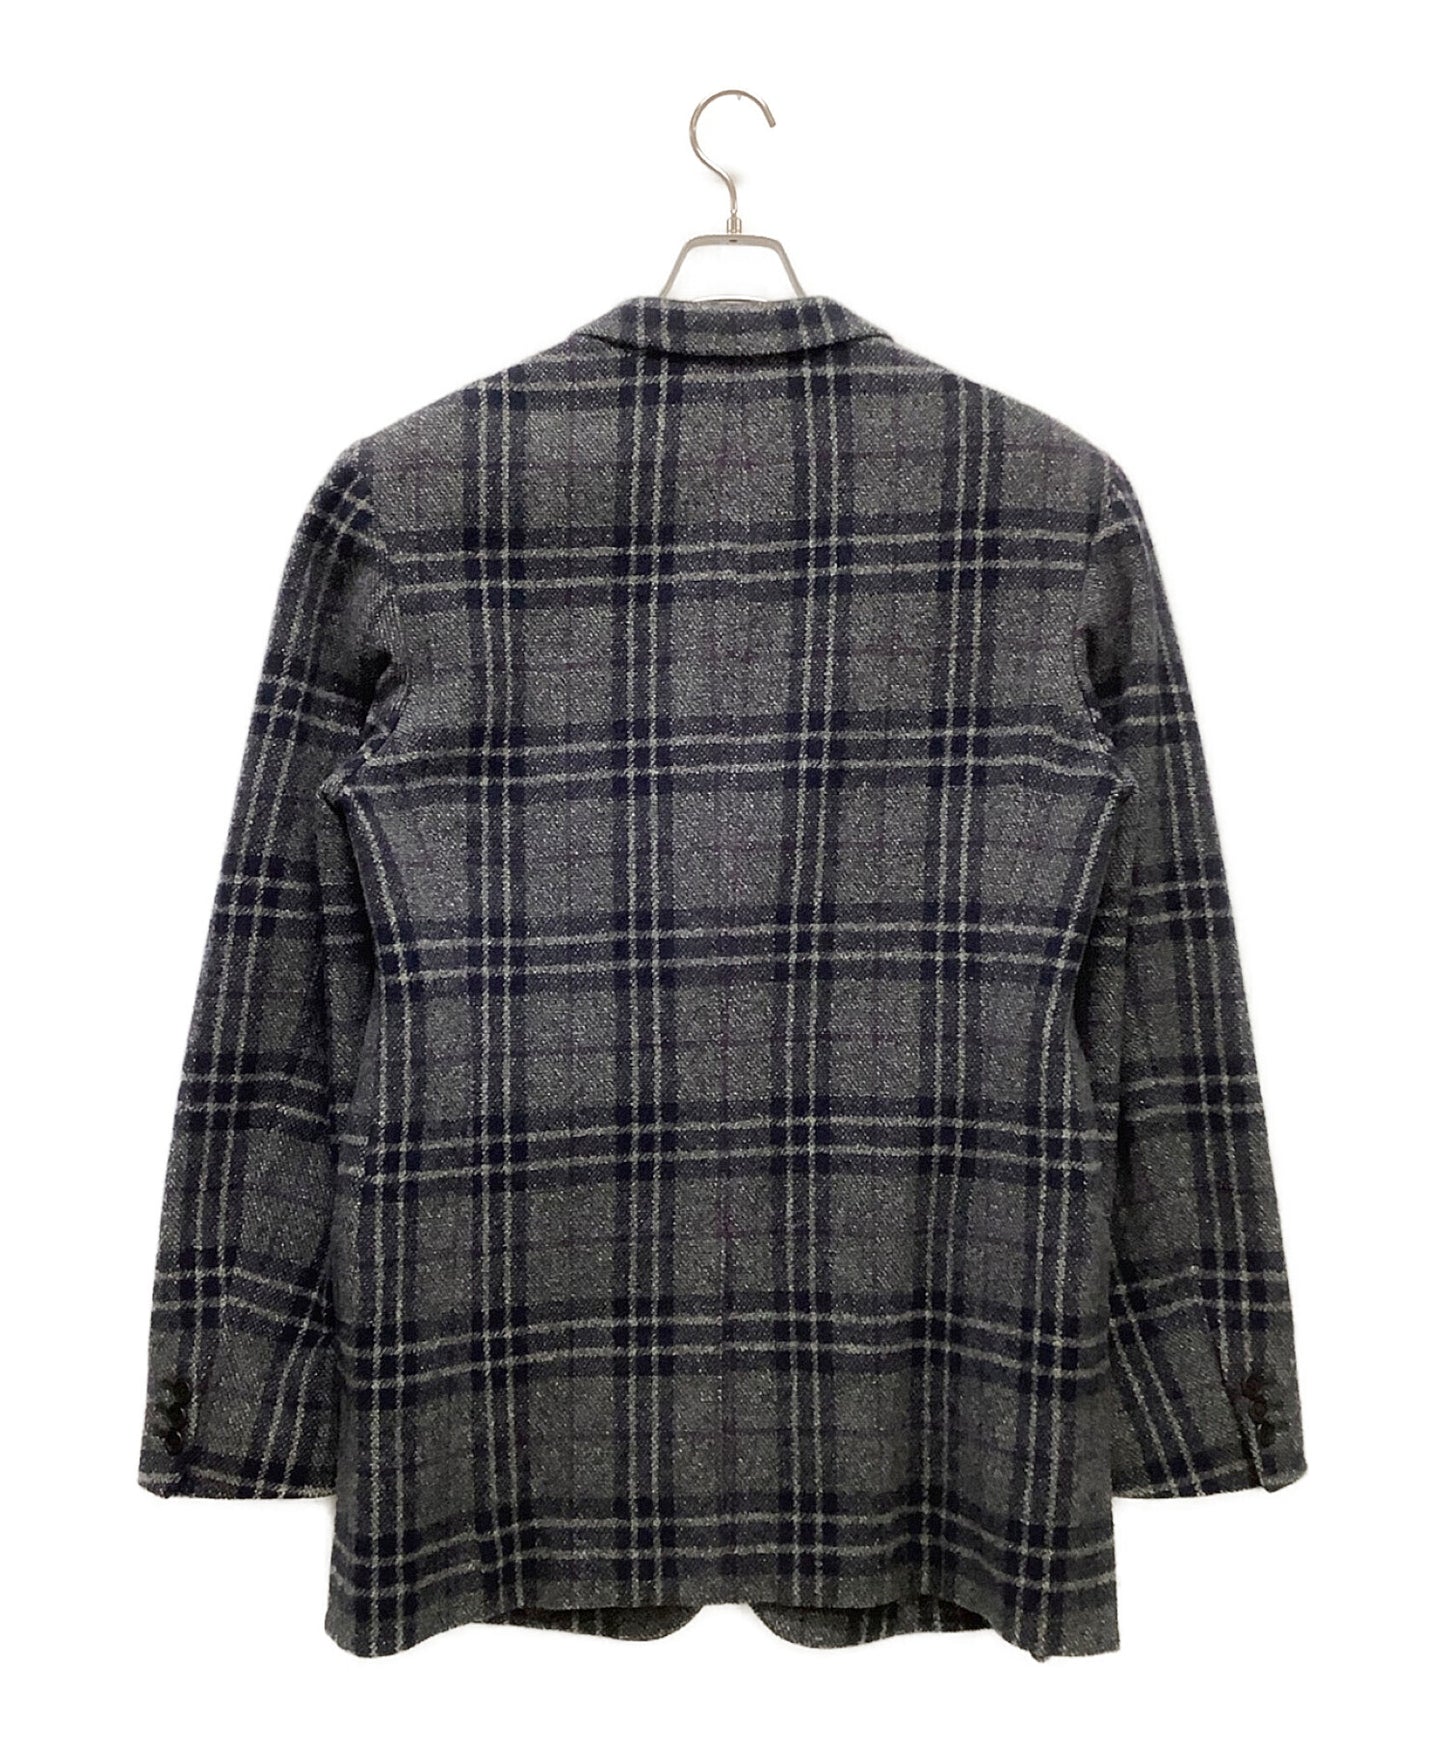 Yohji Yamamoto pour homme wool coat HD-J46-129